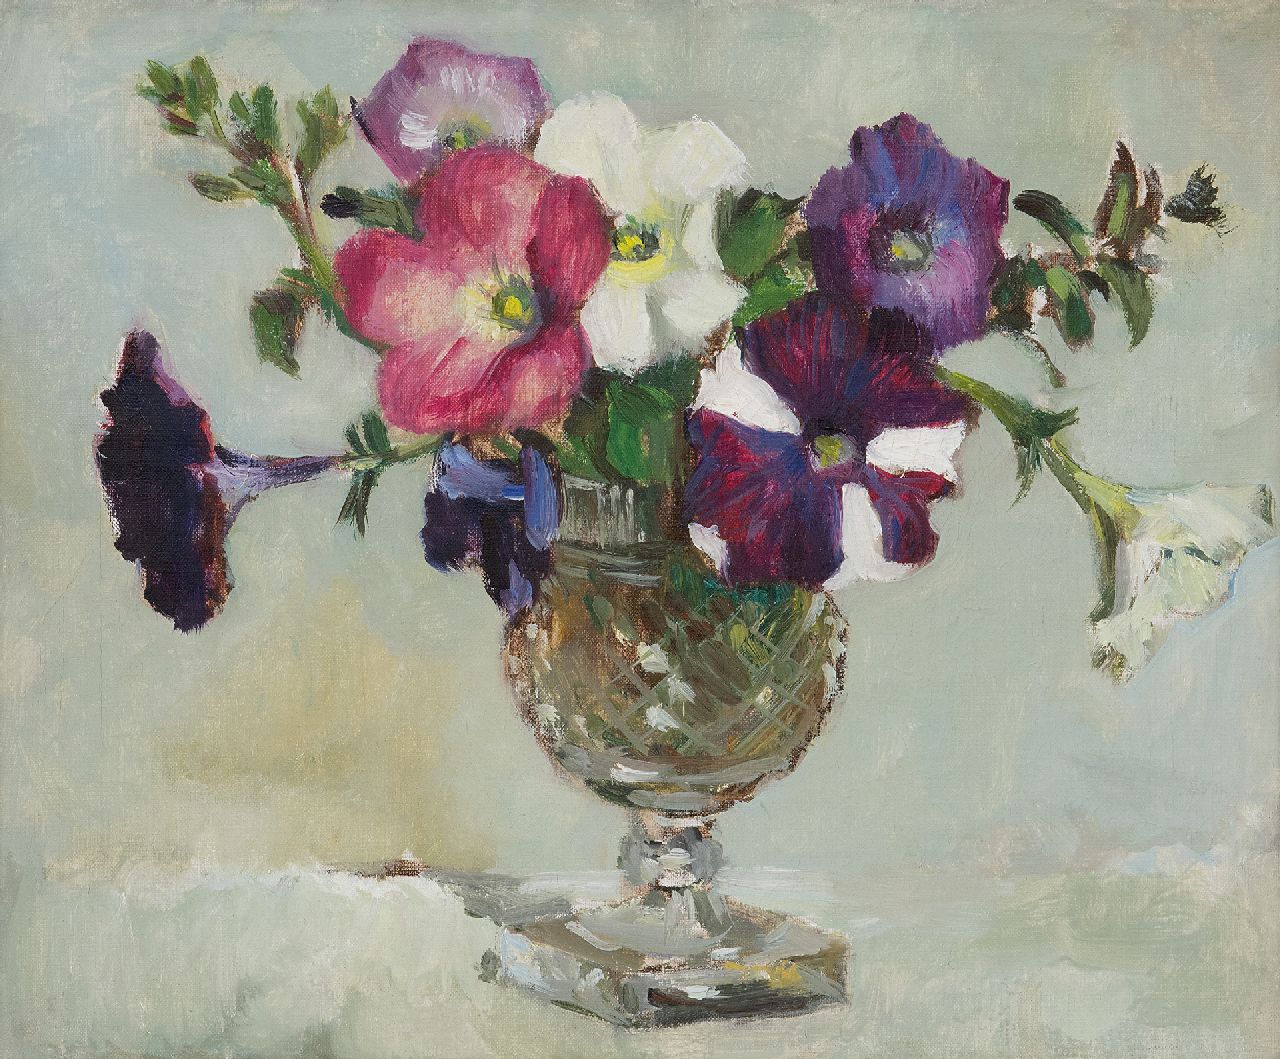 Arntzenius E.C.  | Elise Claudine Arntzenius | Paintings offered for sale | Petunias in a vase, oil on canvas 25.2 x 30.2 cm